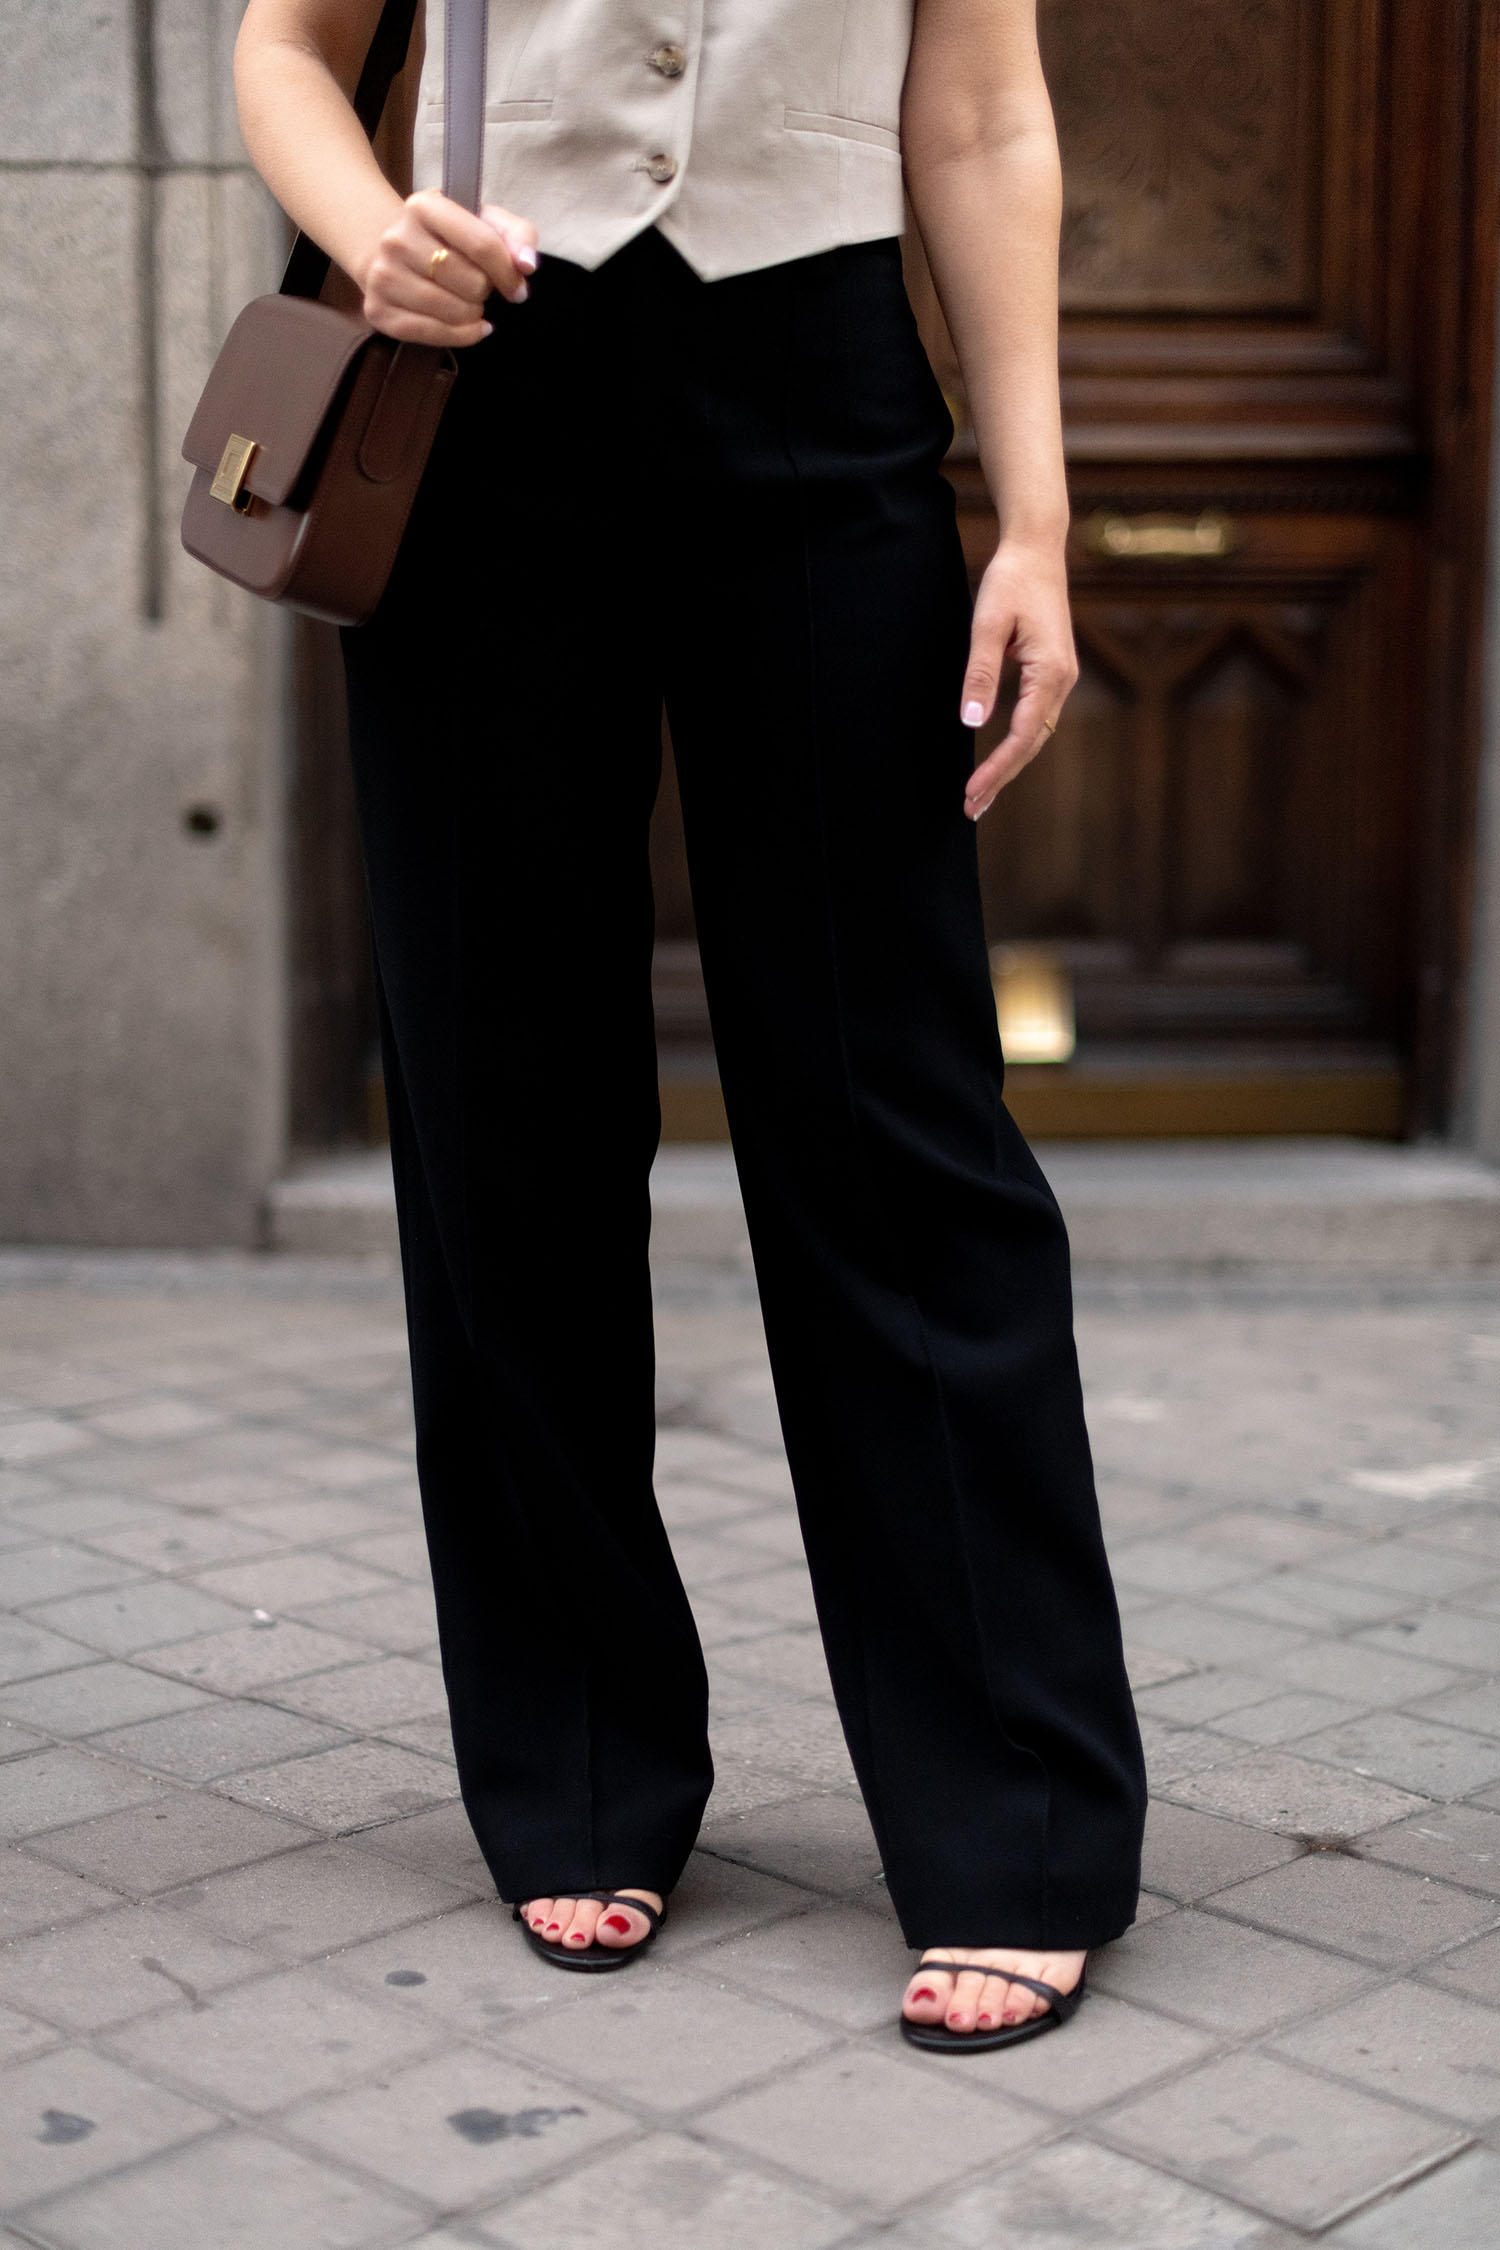 Coco & Voltaire - Zara Francoise trousers, Zara sandals, A. Cloud official bag